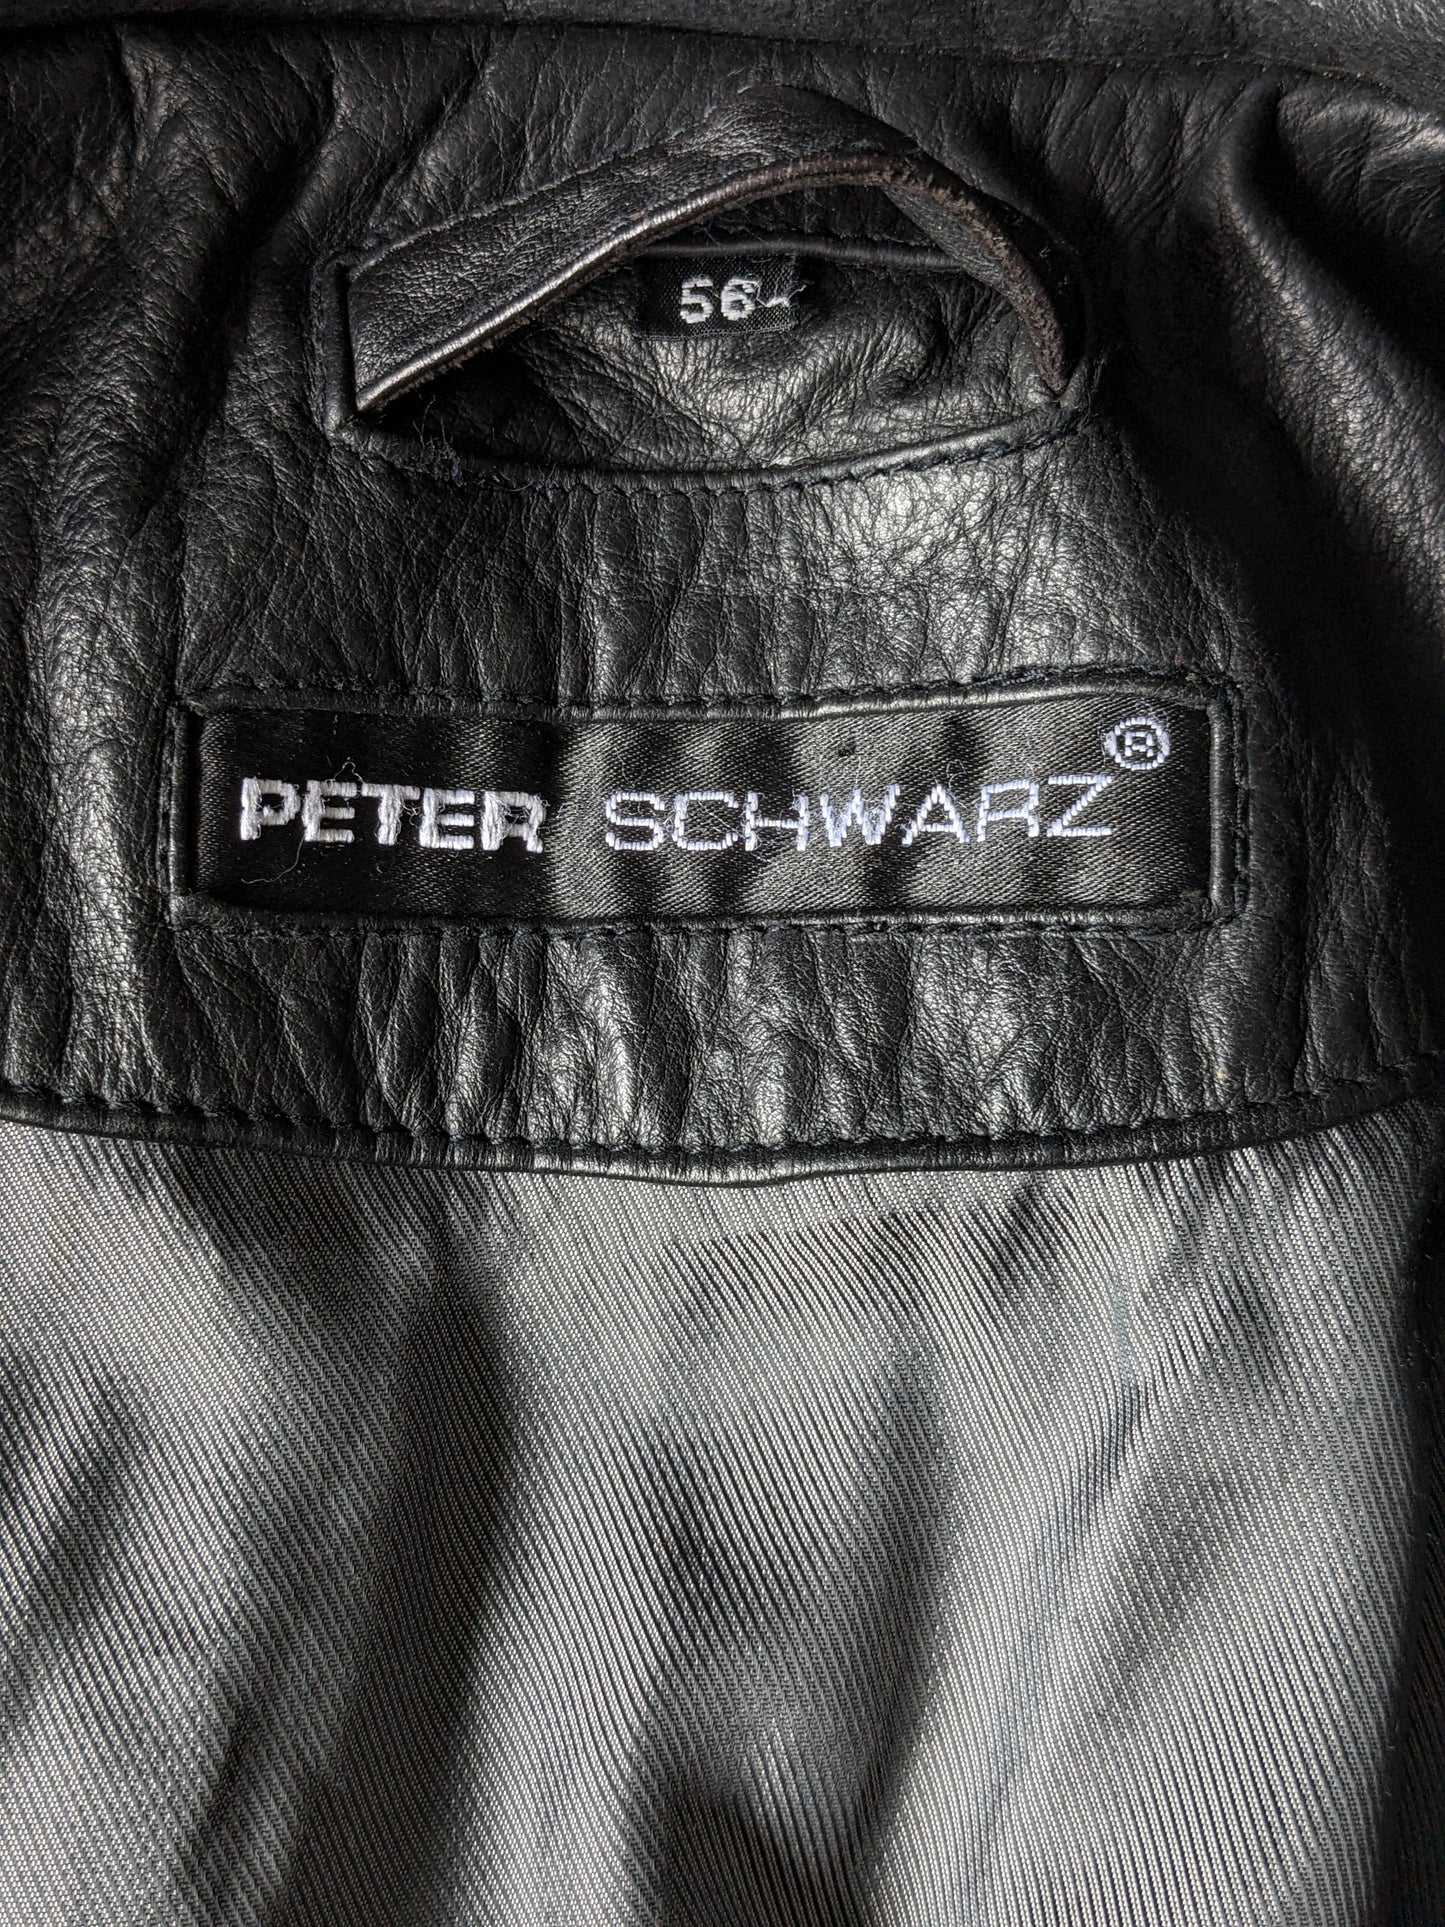 Peter Schwarz Leren Bodywarmer. Dubbele sluiting en 2 binnenzakken. Zwart gekleurd. Maat 56 / XL.